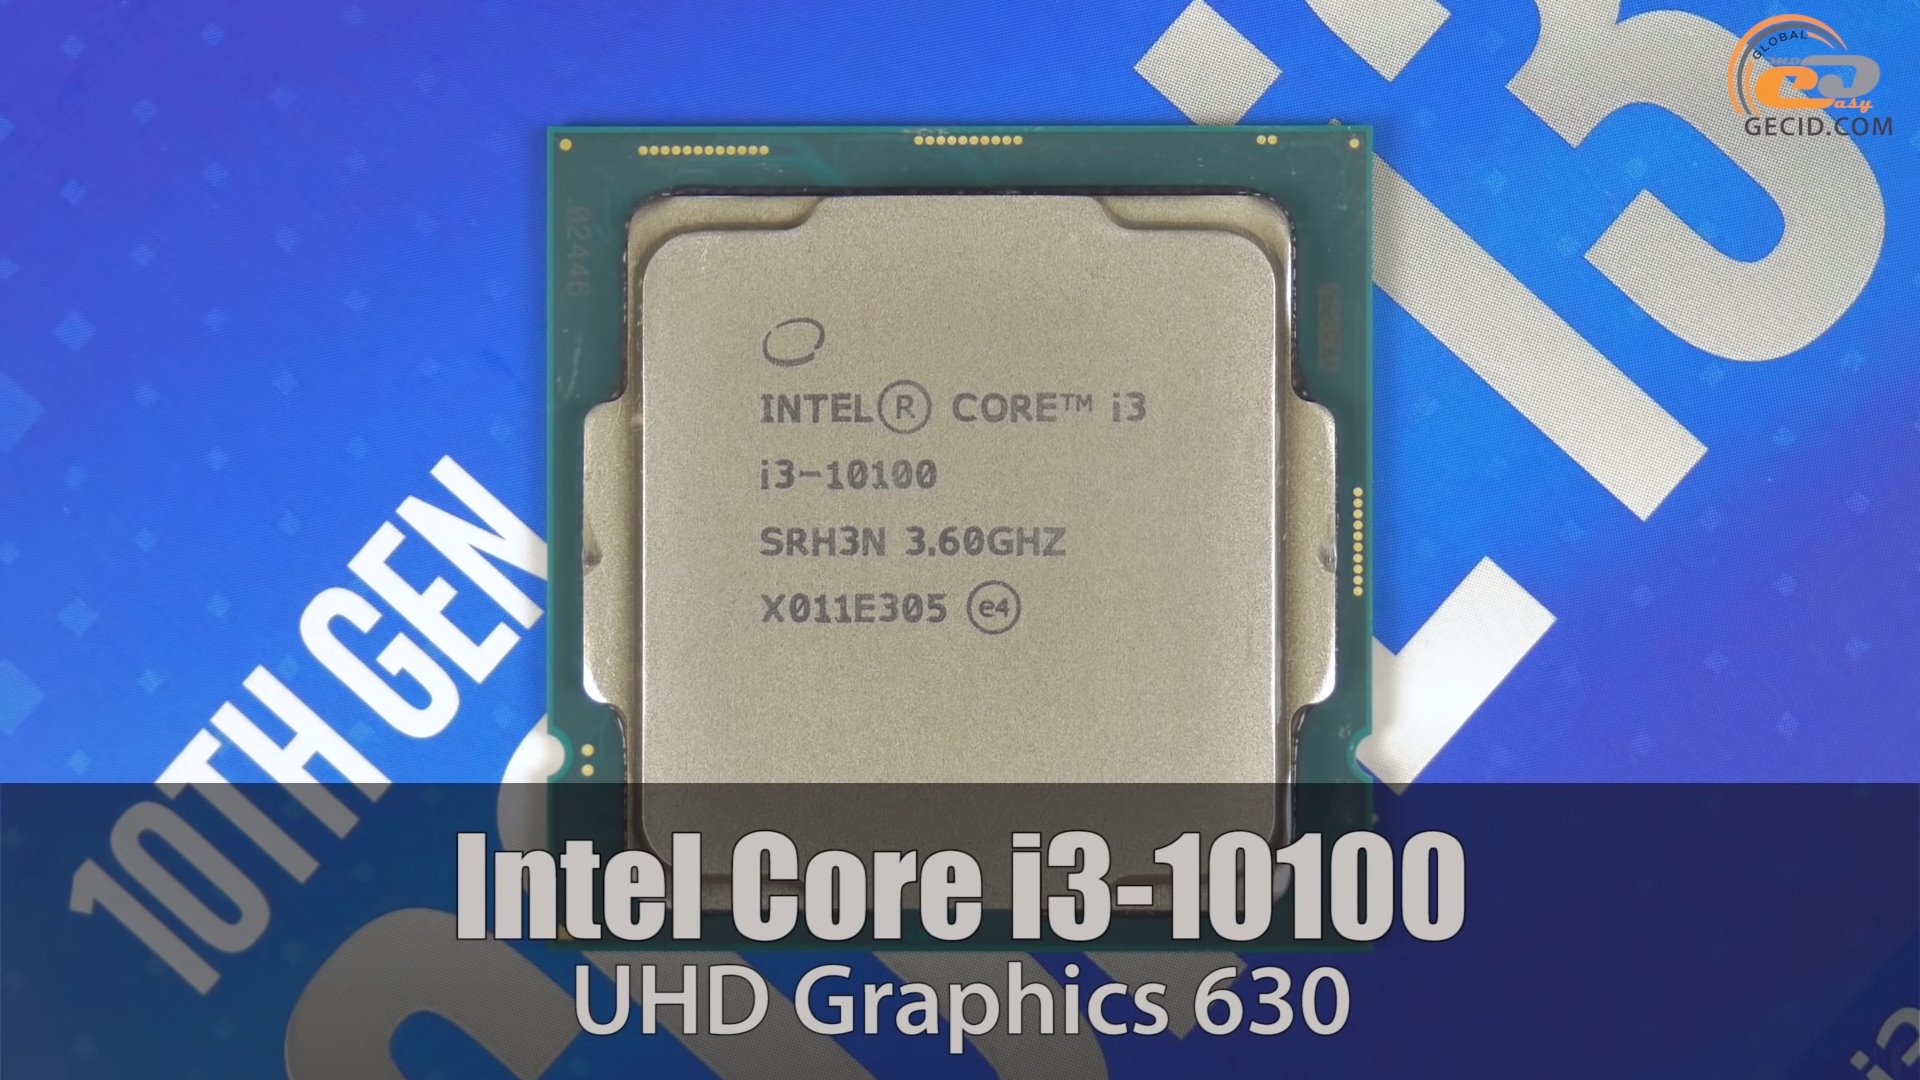 Intel core i3 uhd graphics 630. Graphics 630 видеокарта. Intel UHD Graphics 630 видеокарта. UHD Graphics 710. UHD 610.